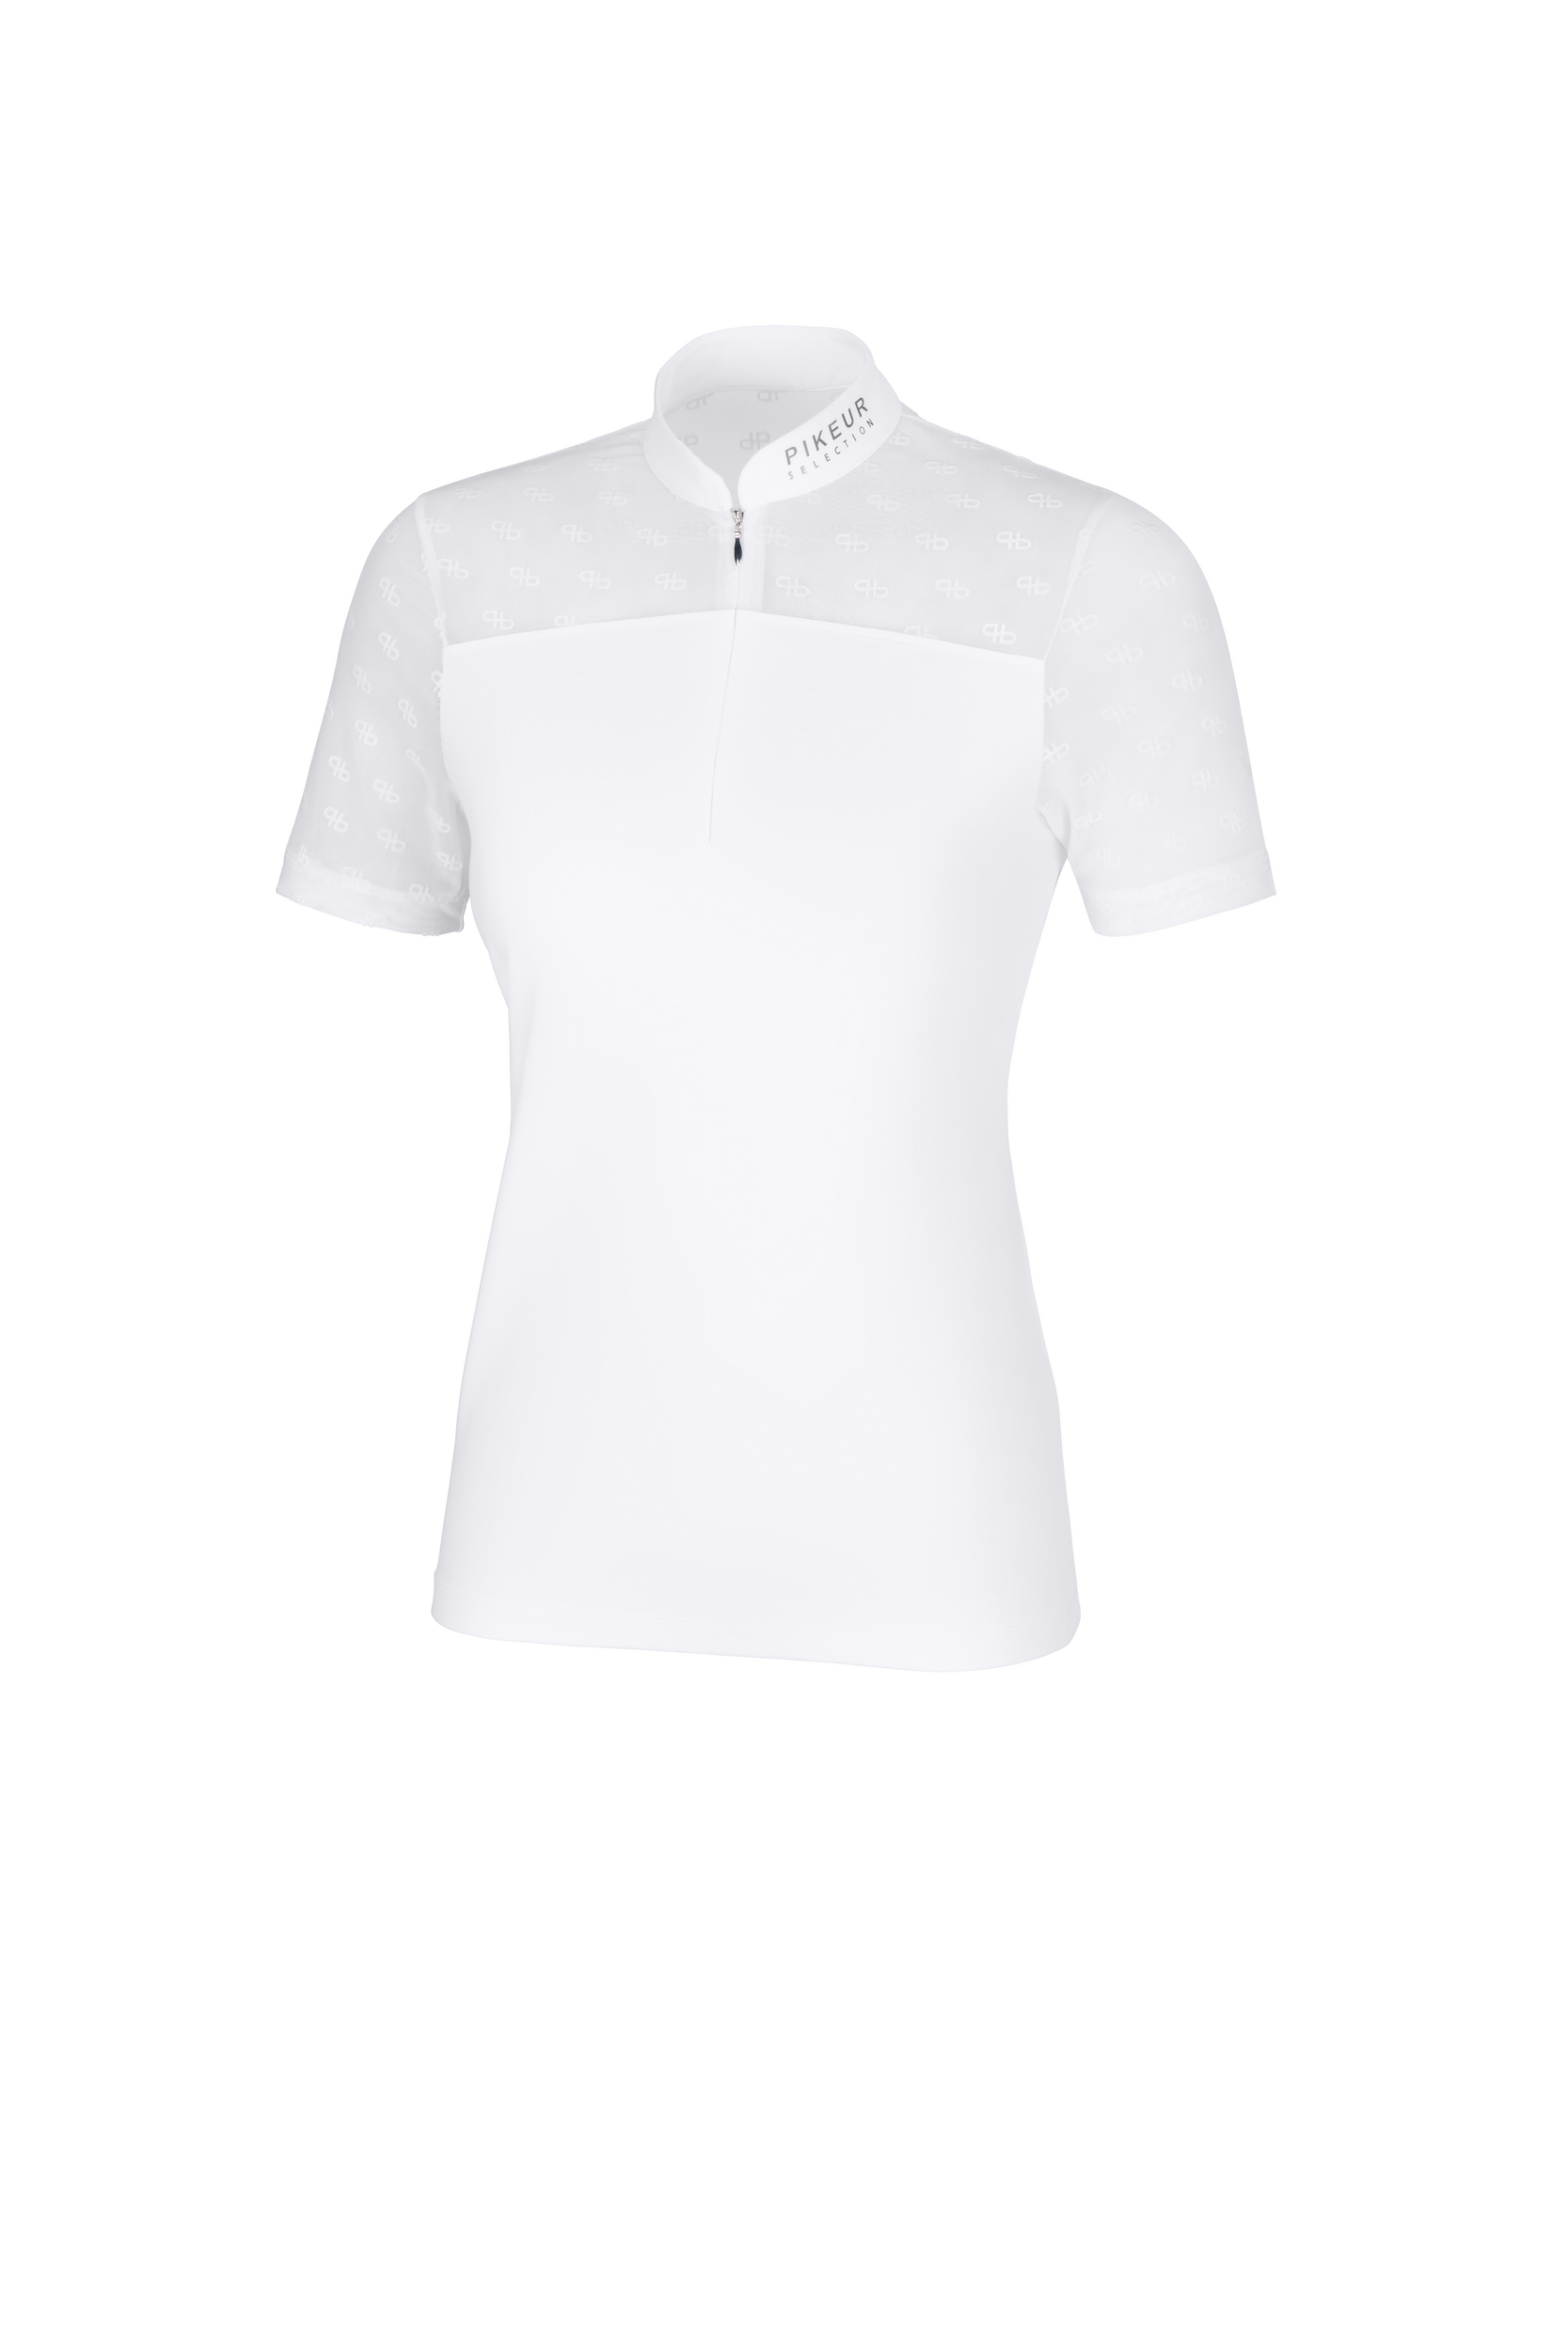 PIKEUR Damen Trainings Zip Shirt Kurzarm Selection FS24 - white - 38 - 2